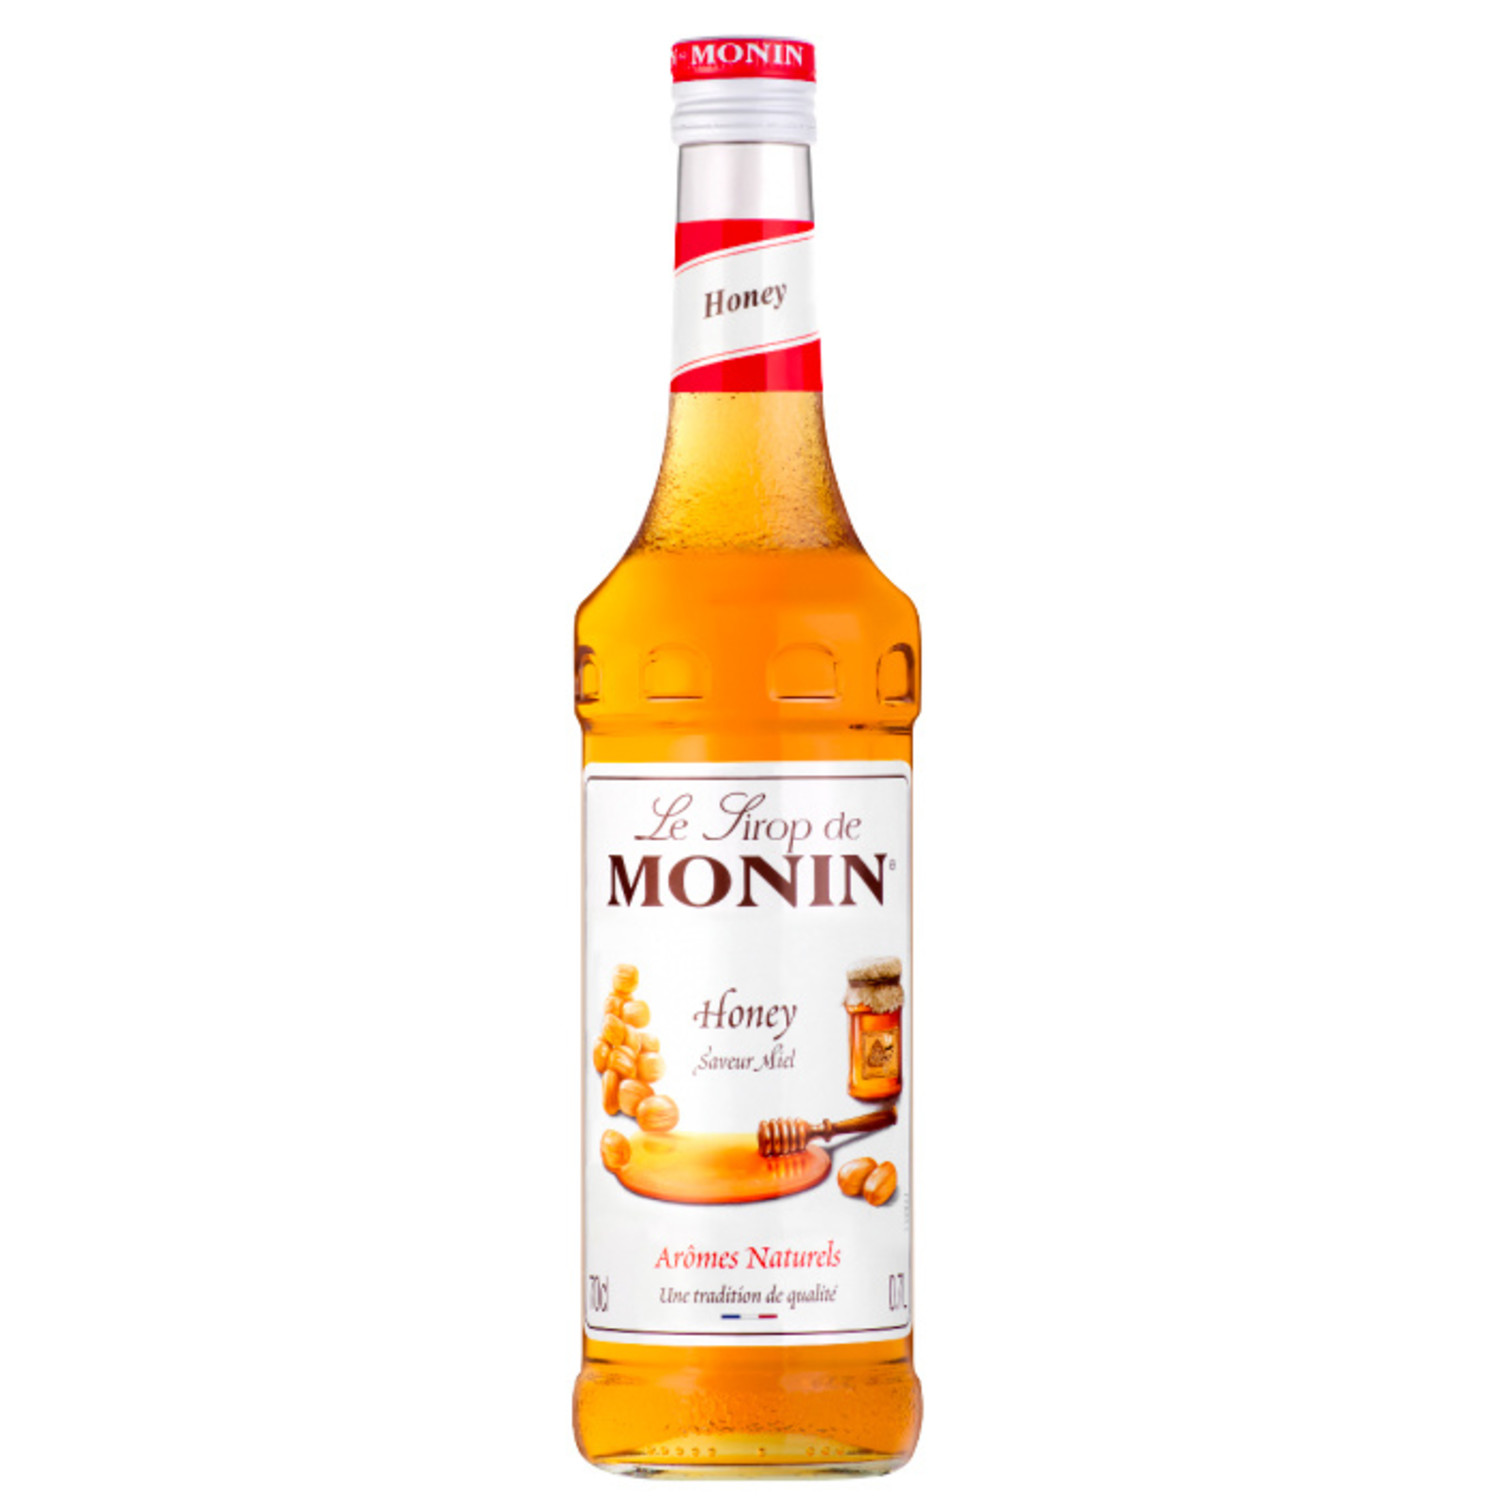 MONIN Honey, Miel syrup 70cl